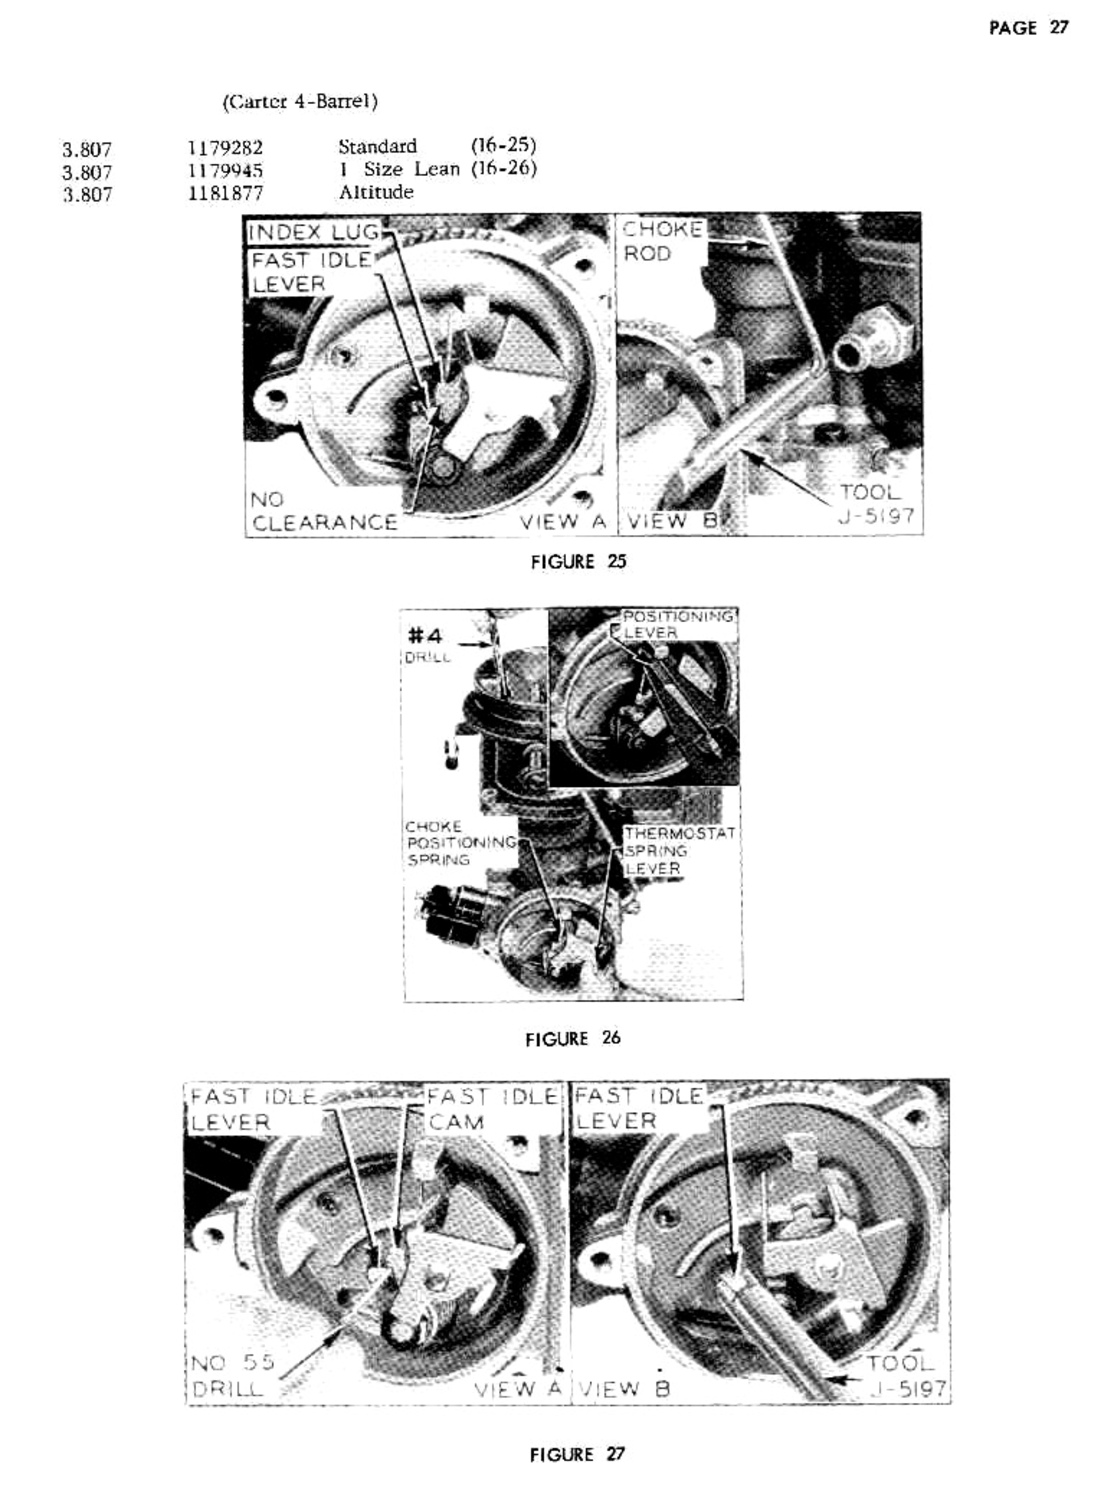 n_1957 Buick Product Service  Bulletins-033-033.jpg